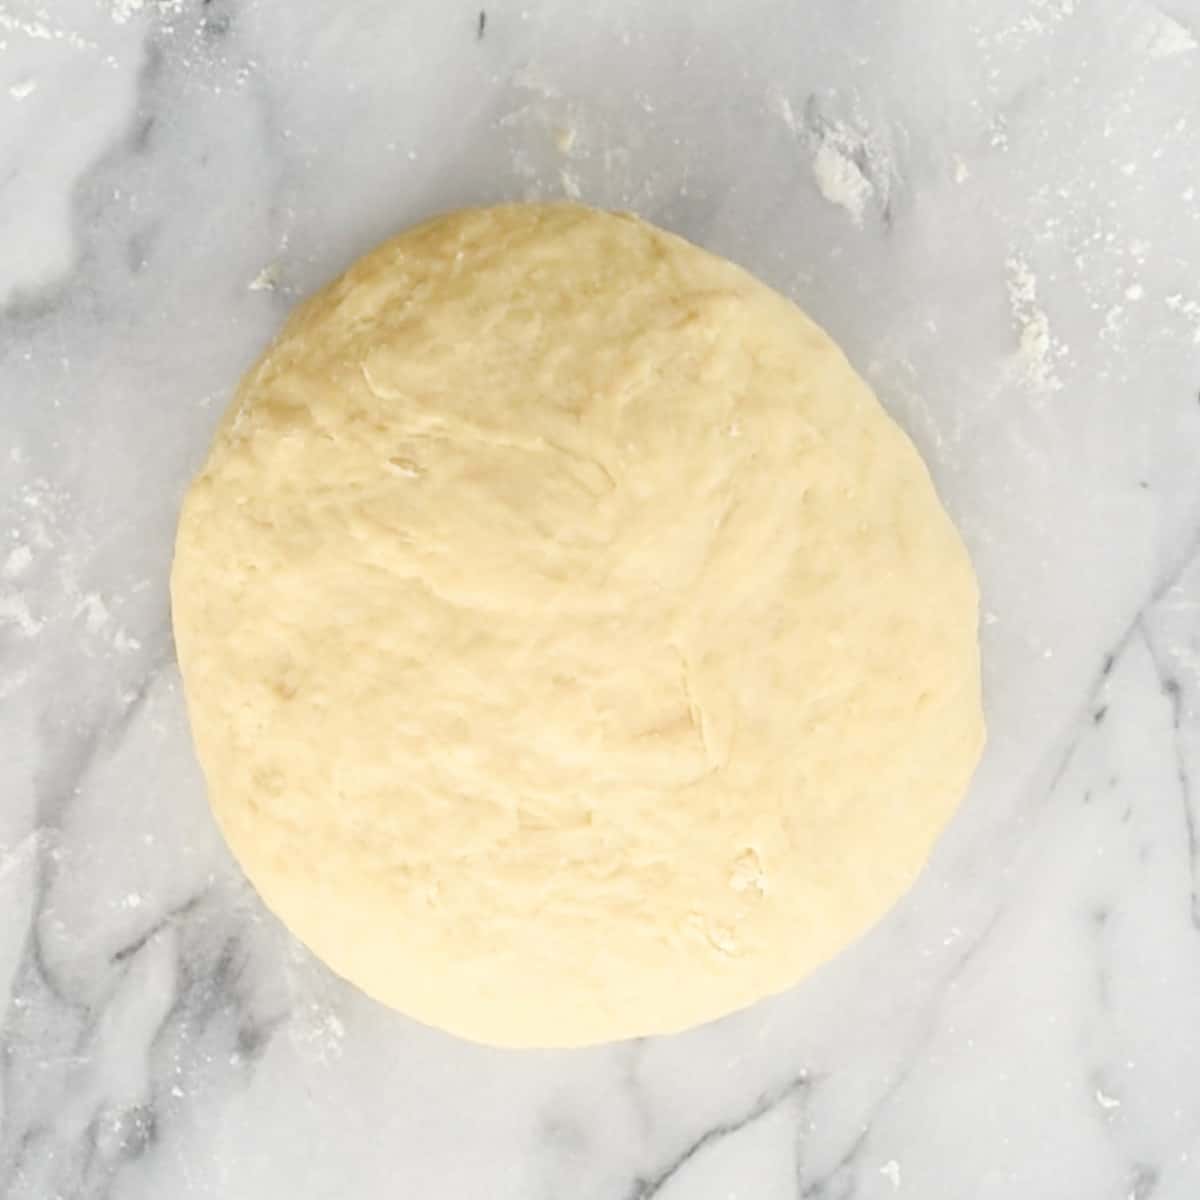 homemade dinner roll dough shaped into a ball